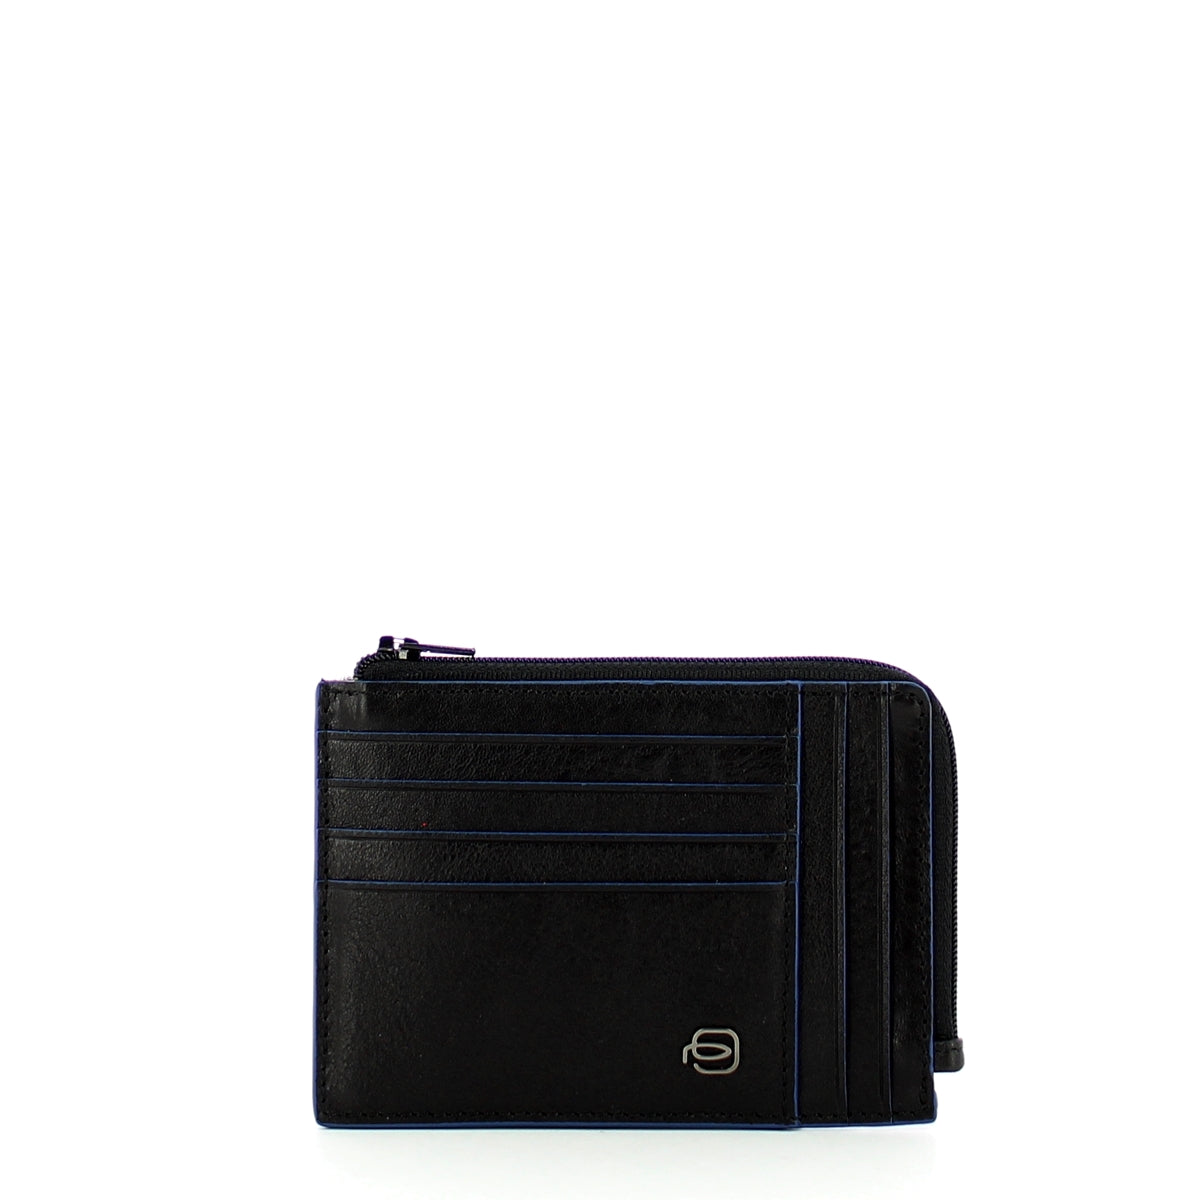 Piquadro - Credit card pouch B2S - PU1243B2SR - NERO